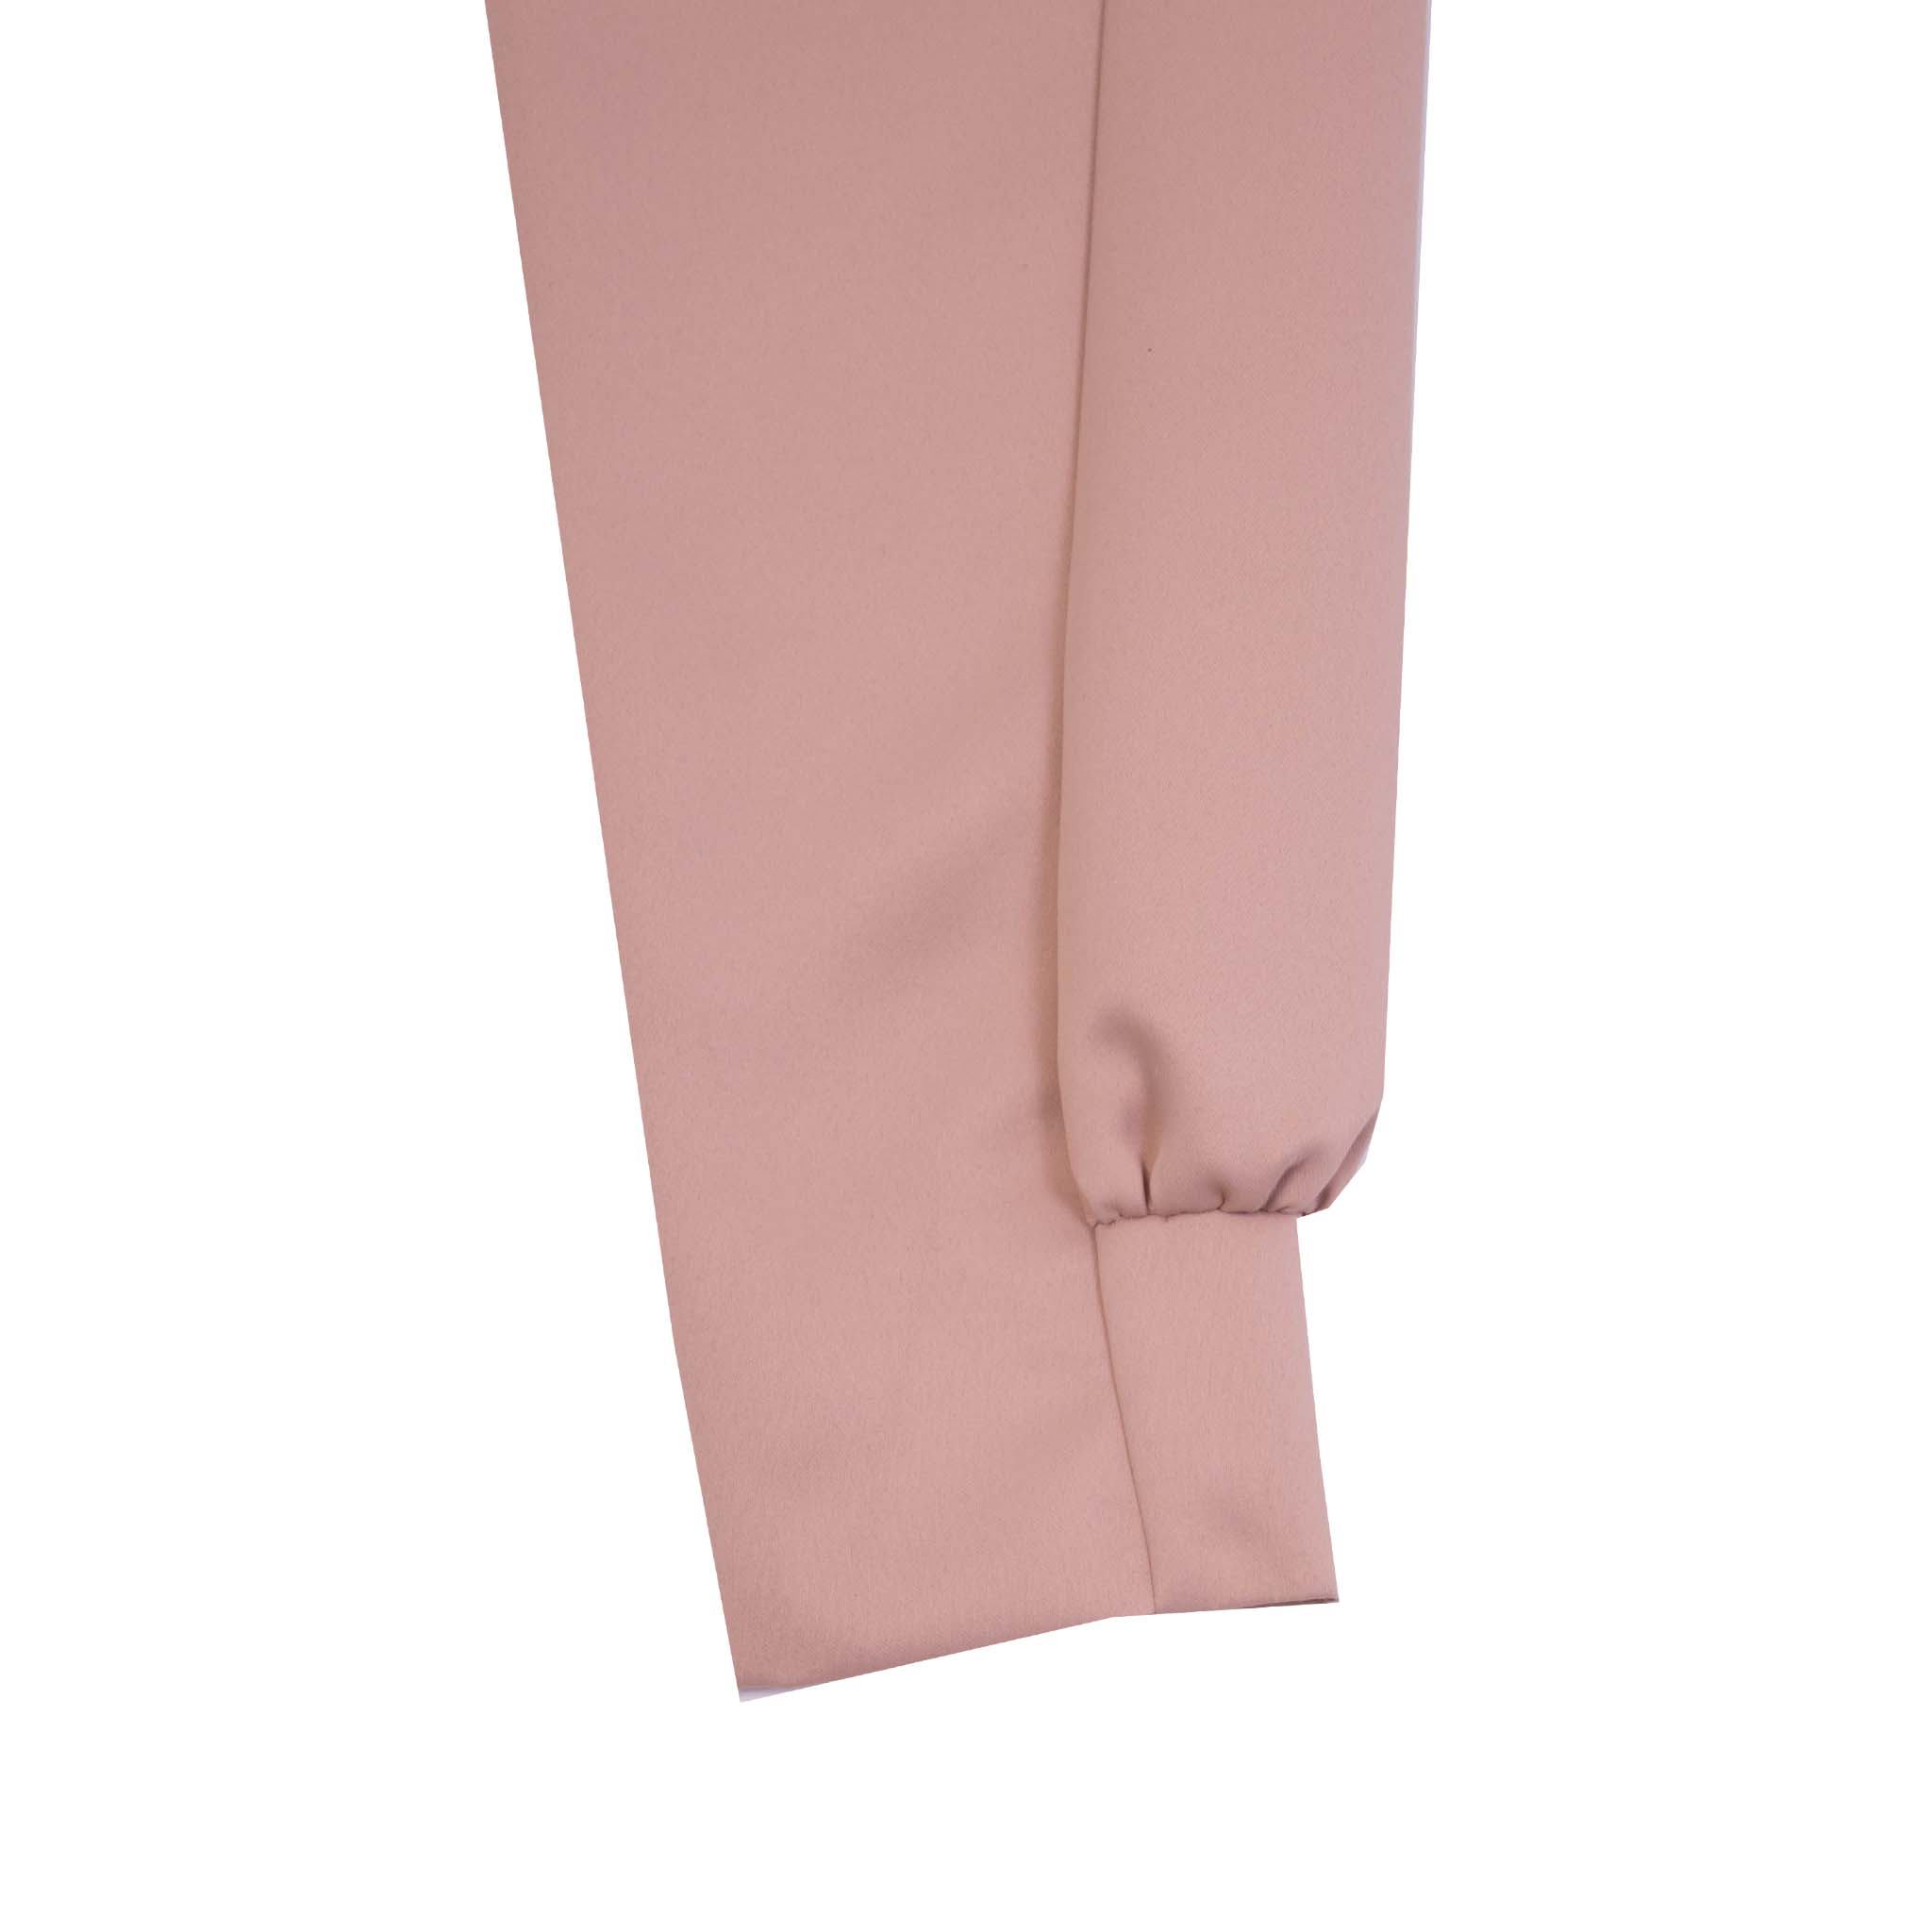 Lardini Pink Tech Textile Trousers - Fizigo